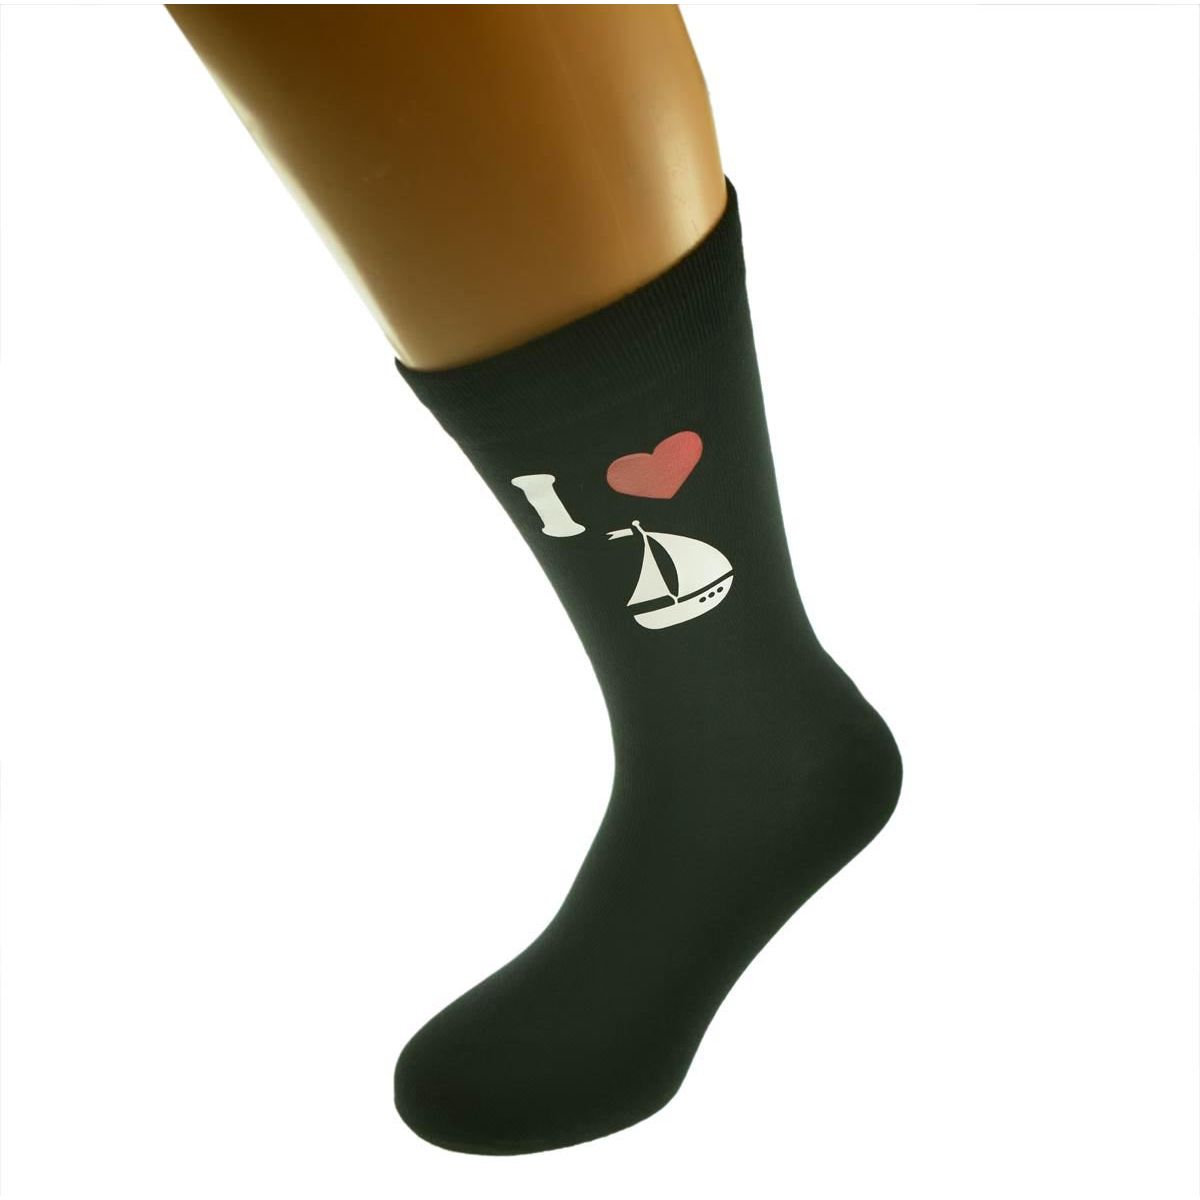 I Love Sailing Picture Design Socks - Ashton and Finch